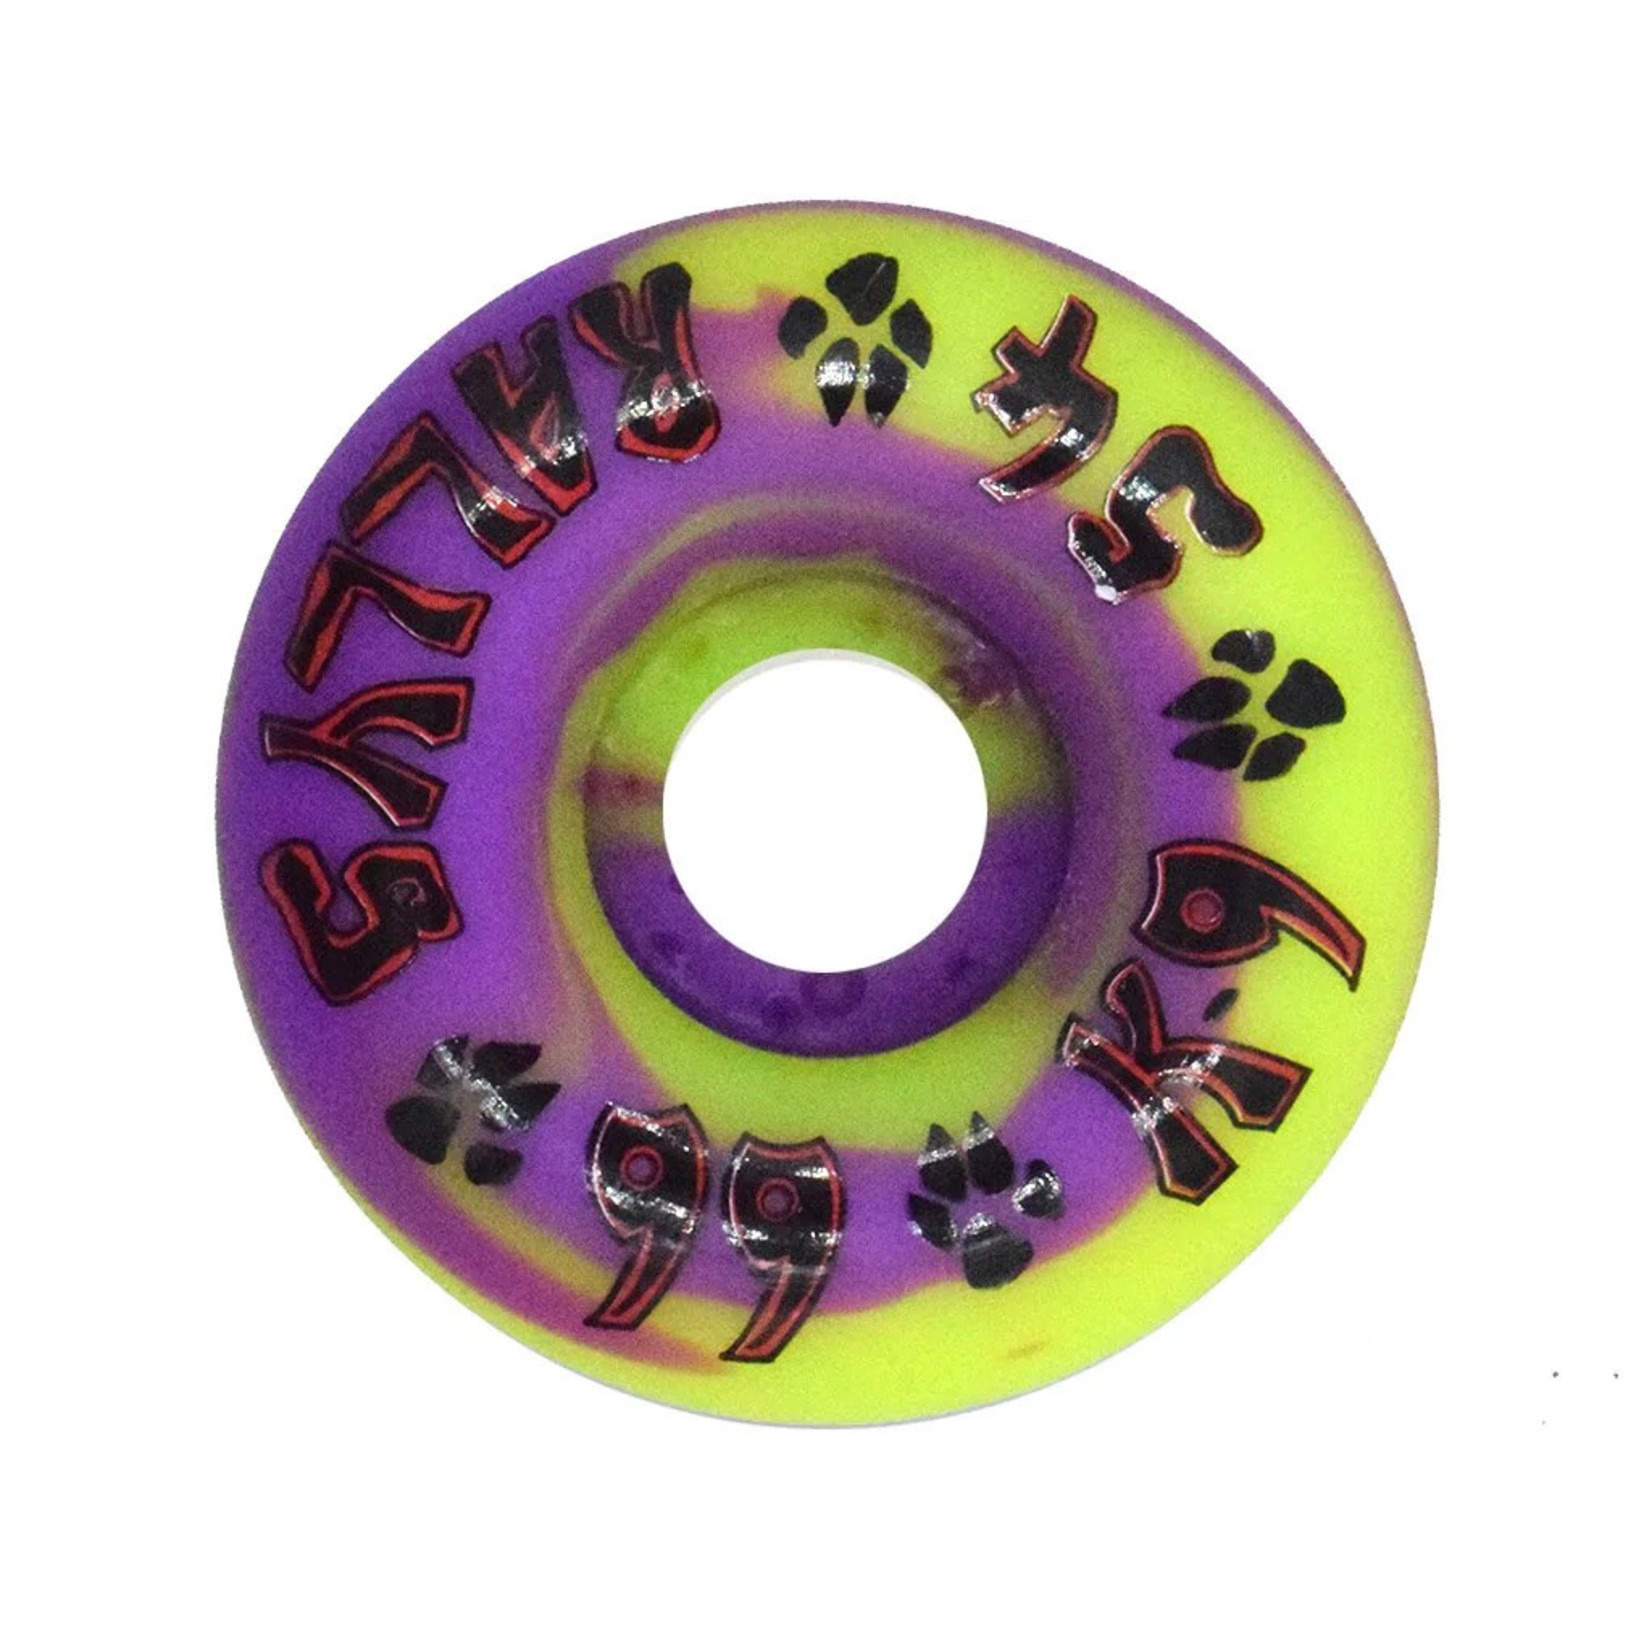 Dogtown Dogtown K-9 Rallys Wheels - 54mm x 99a - Purple / Yellow Swirl (Set of 4)